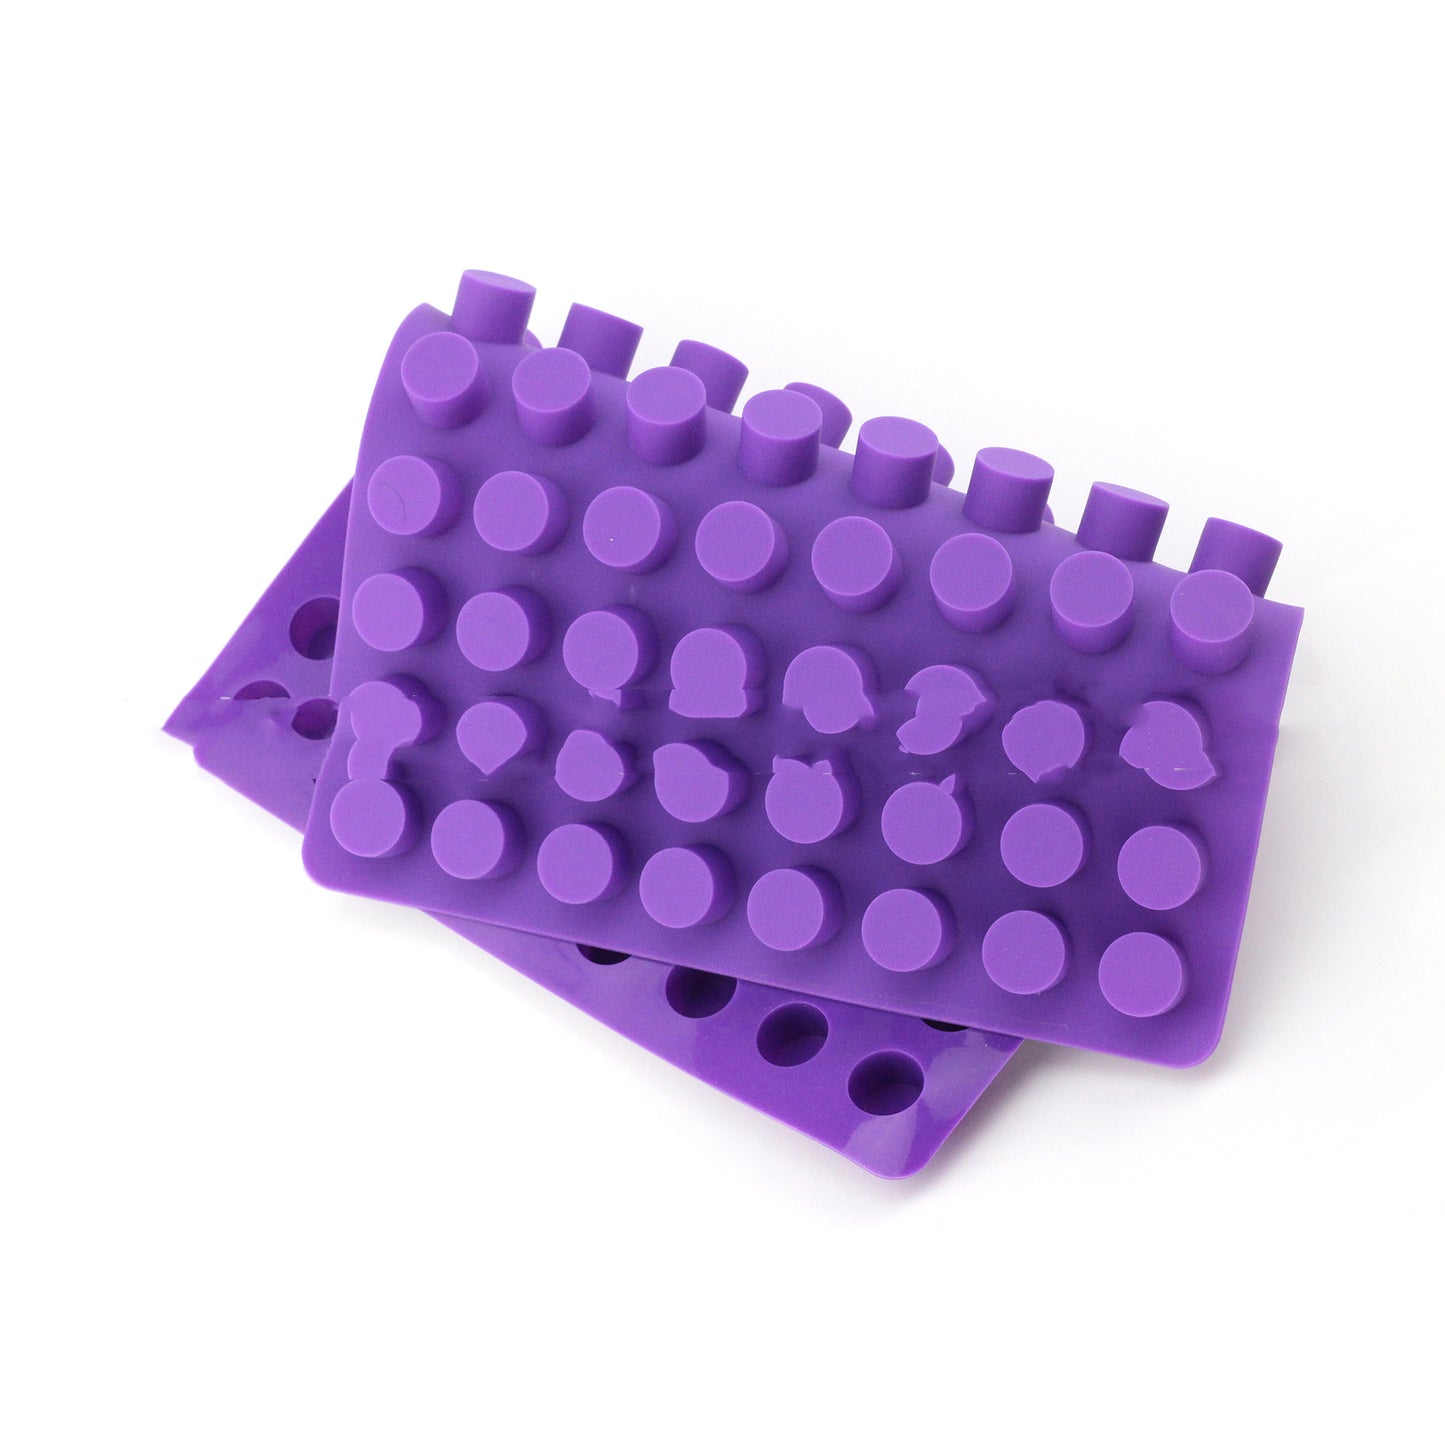 88-hole cylindrical silicone ice tray mold